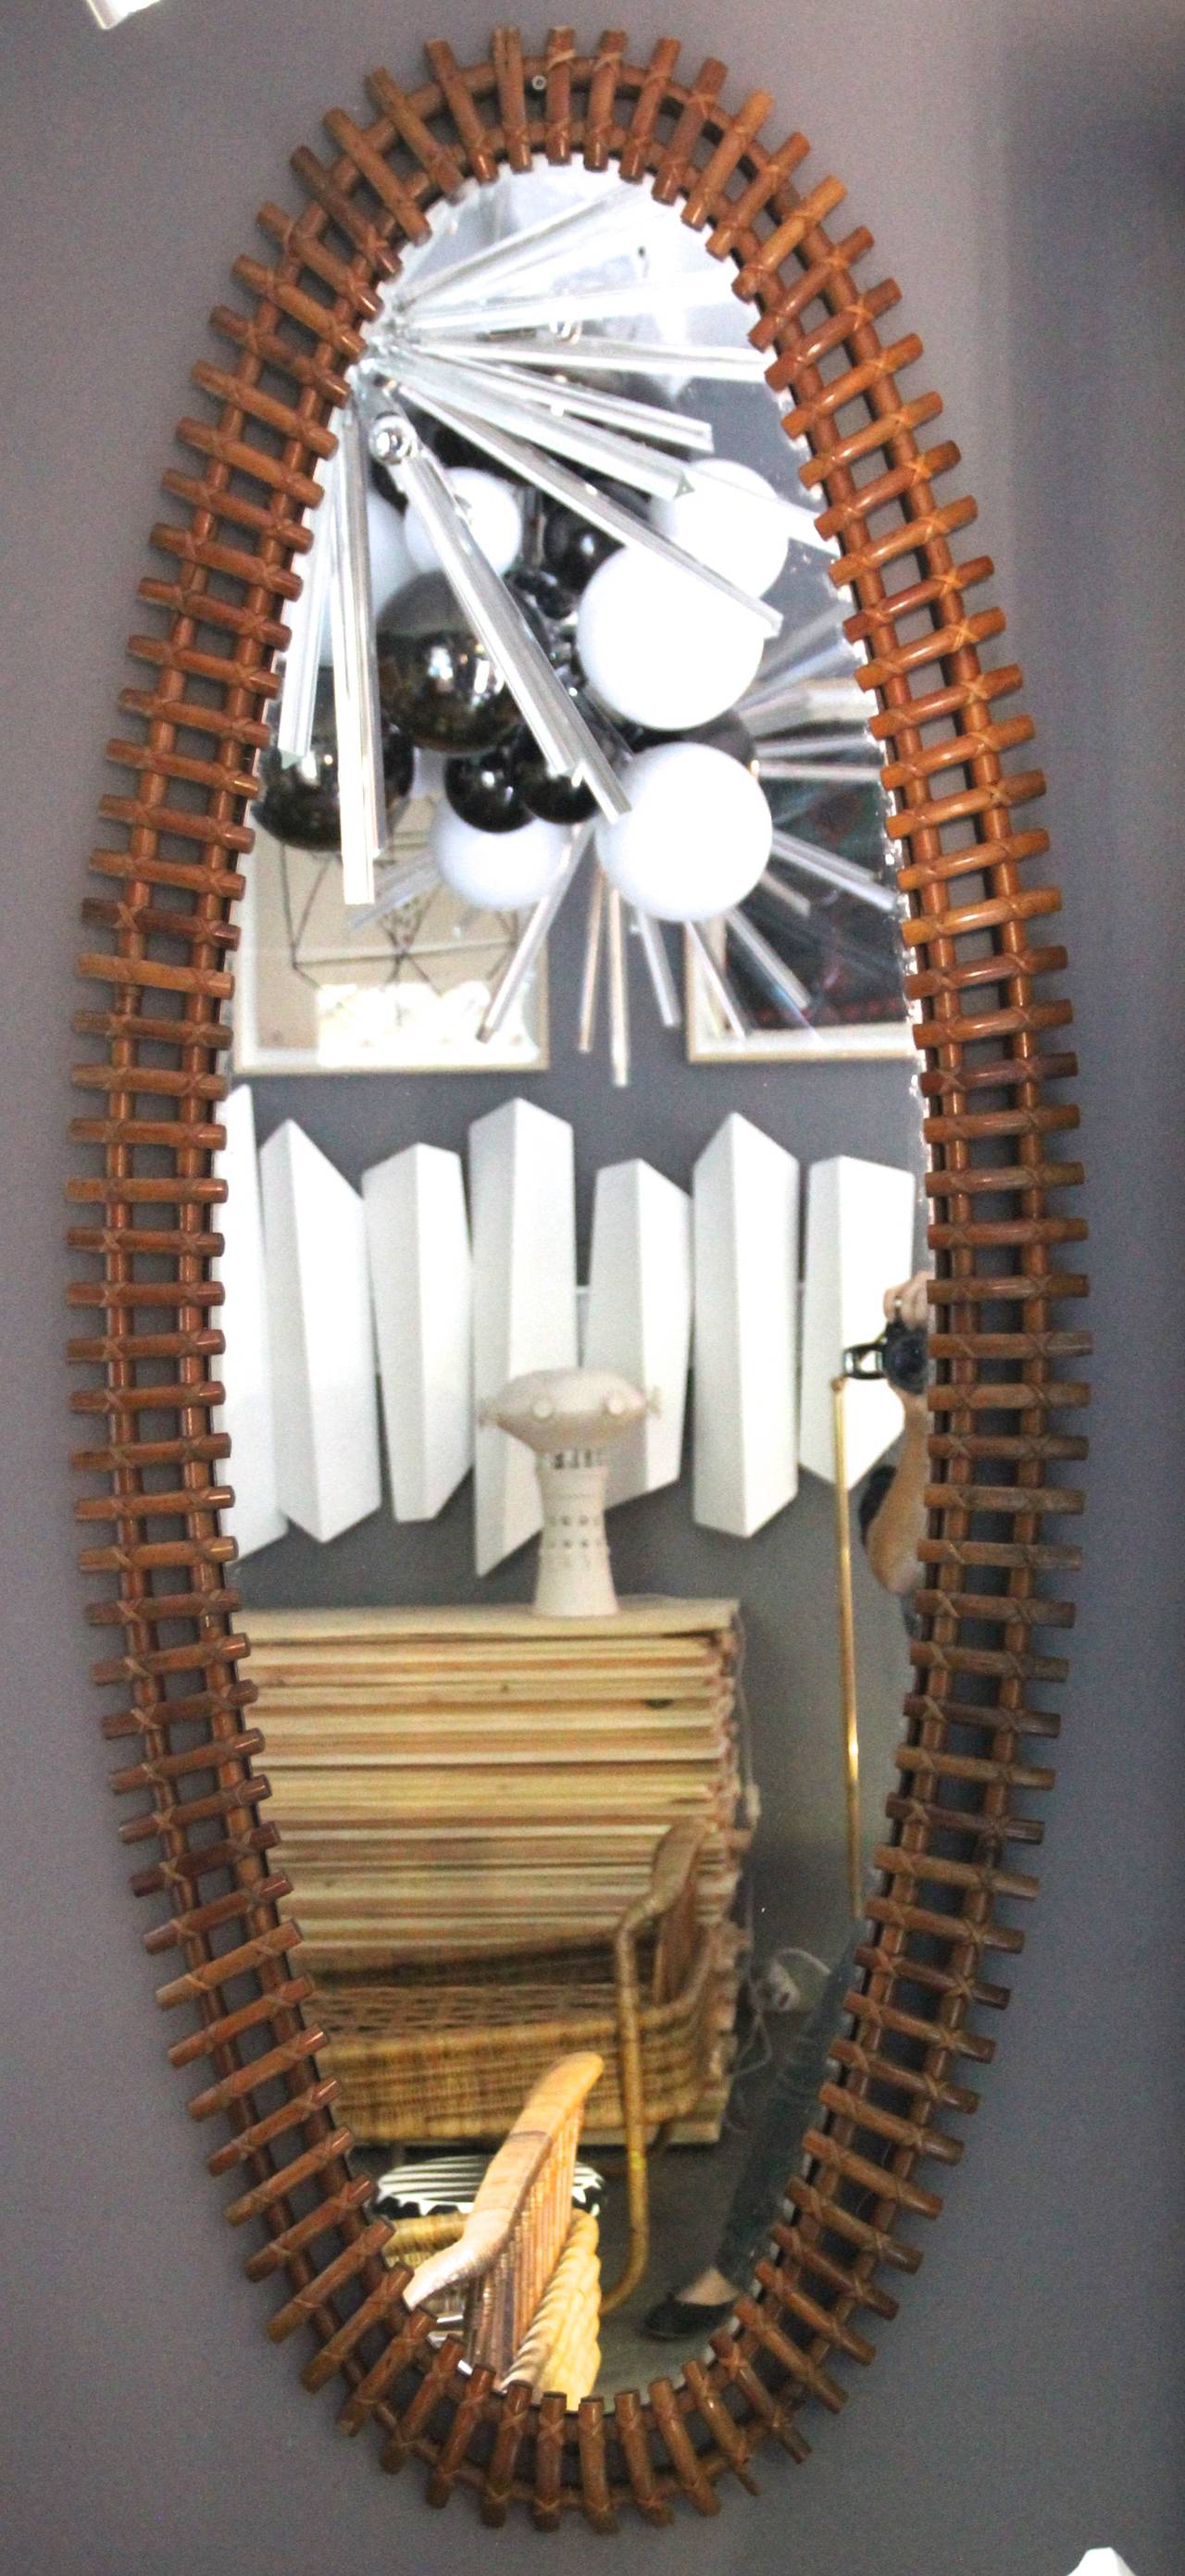 Italian mirror, varnished bamboo, circa 1950, Italy.
Dimensions: Height: 166 cm, width: 68 cm, depth: 3 cm.